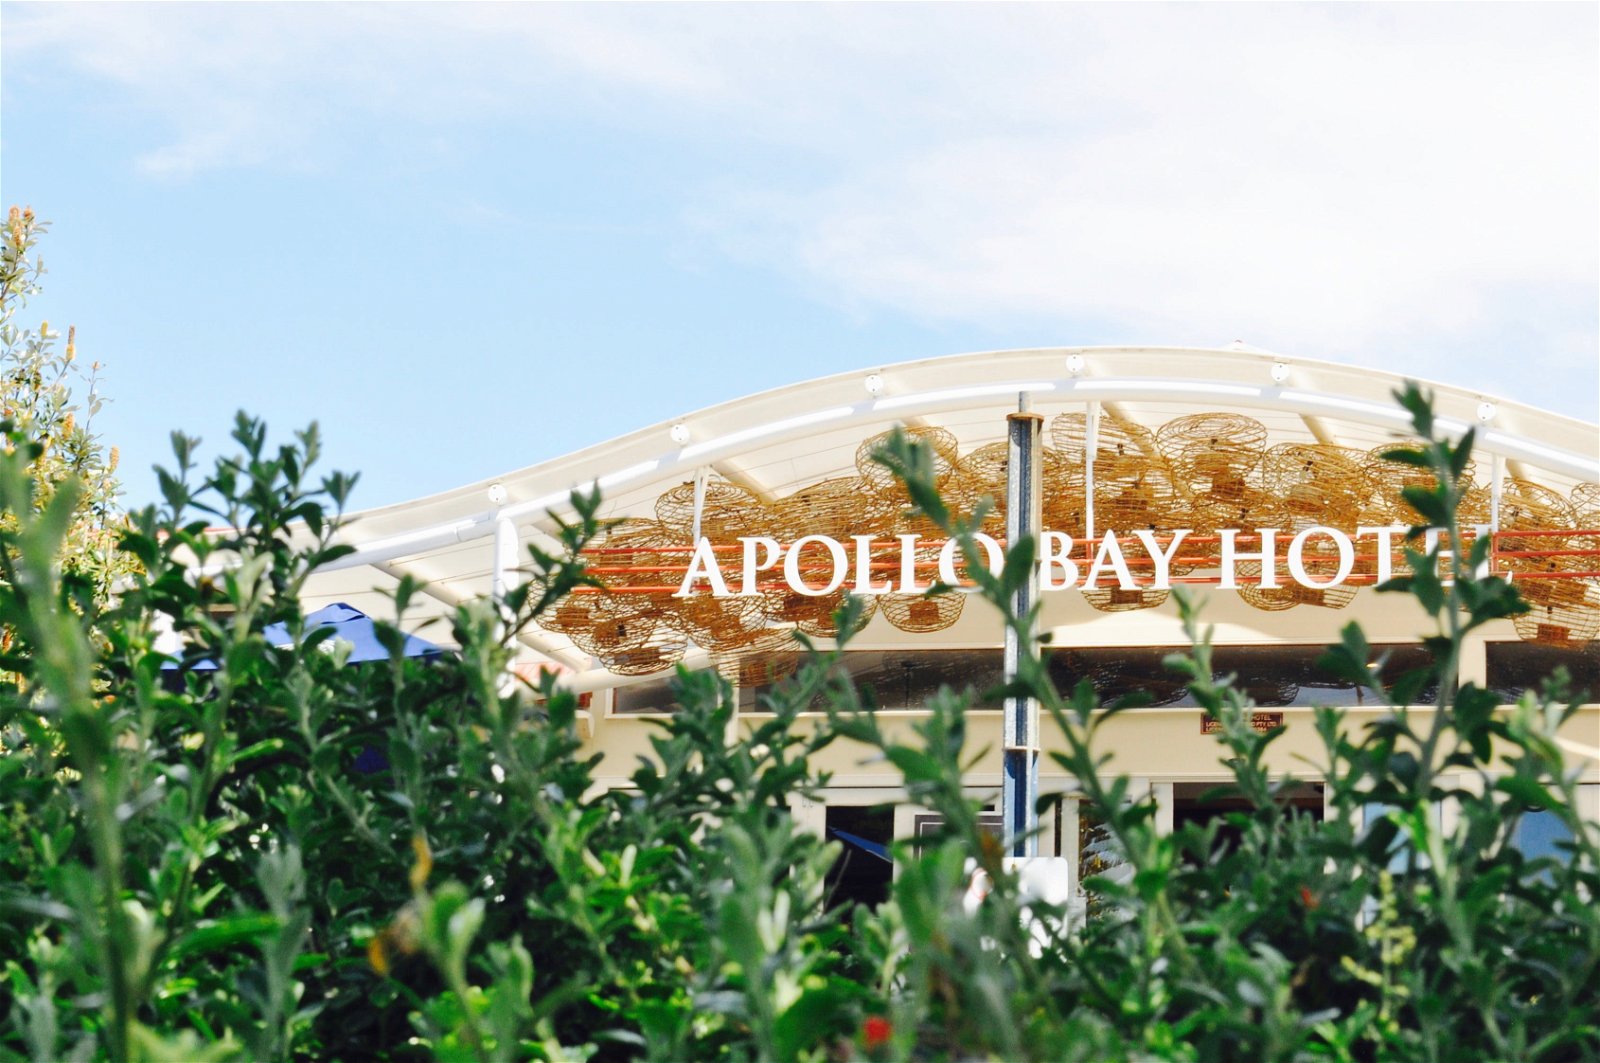 Apollo Bay Hotel - Great Ocean Road Tourism